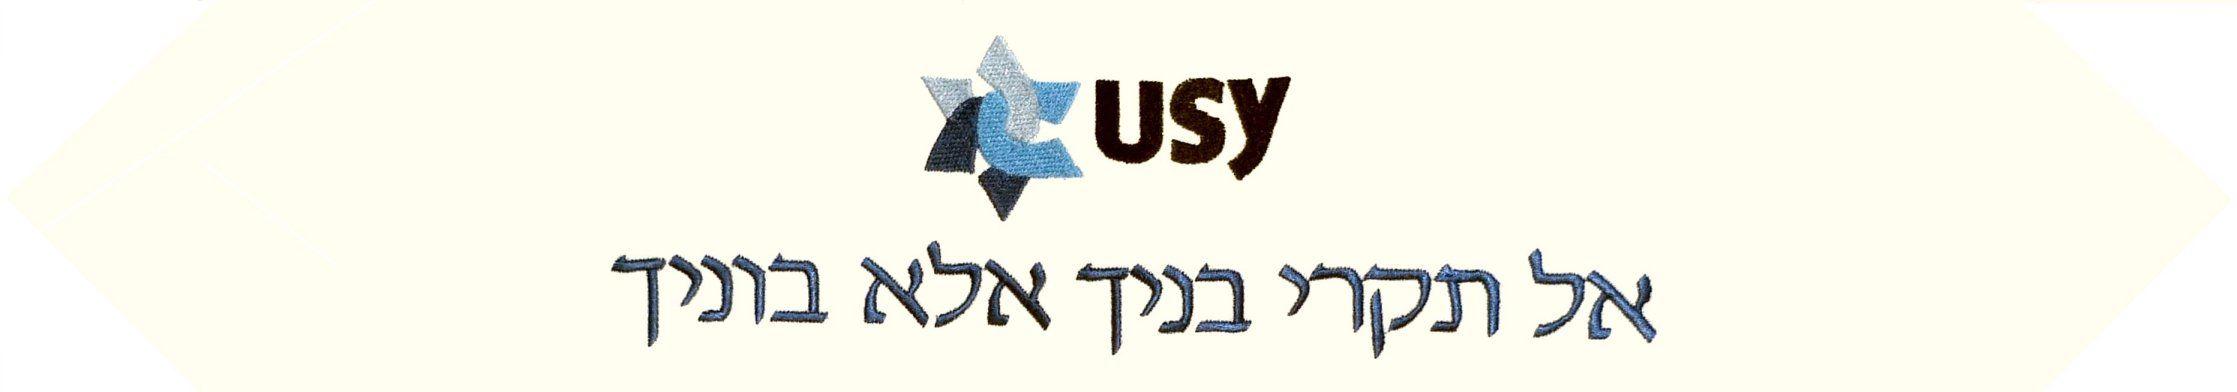 Usy Logo - USY | Kippah Design